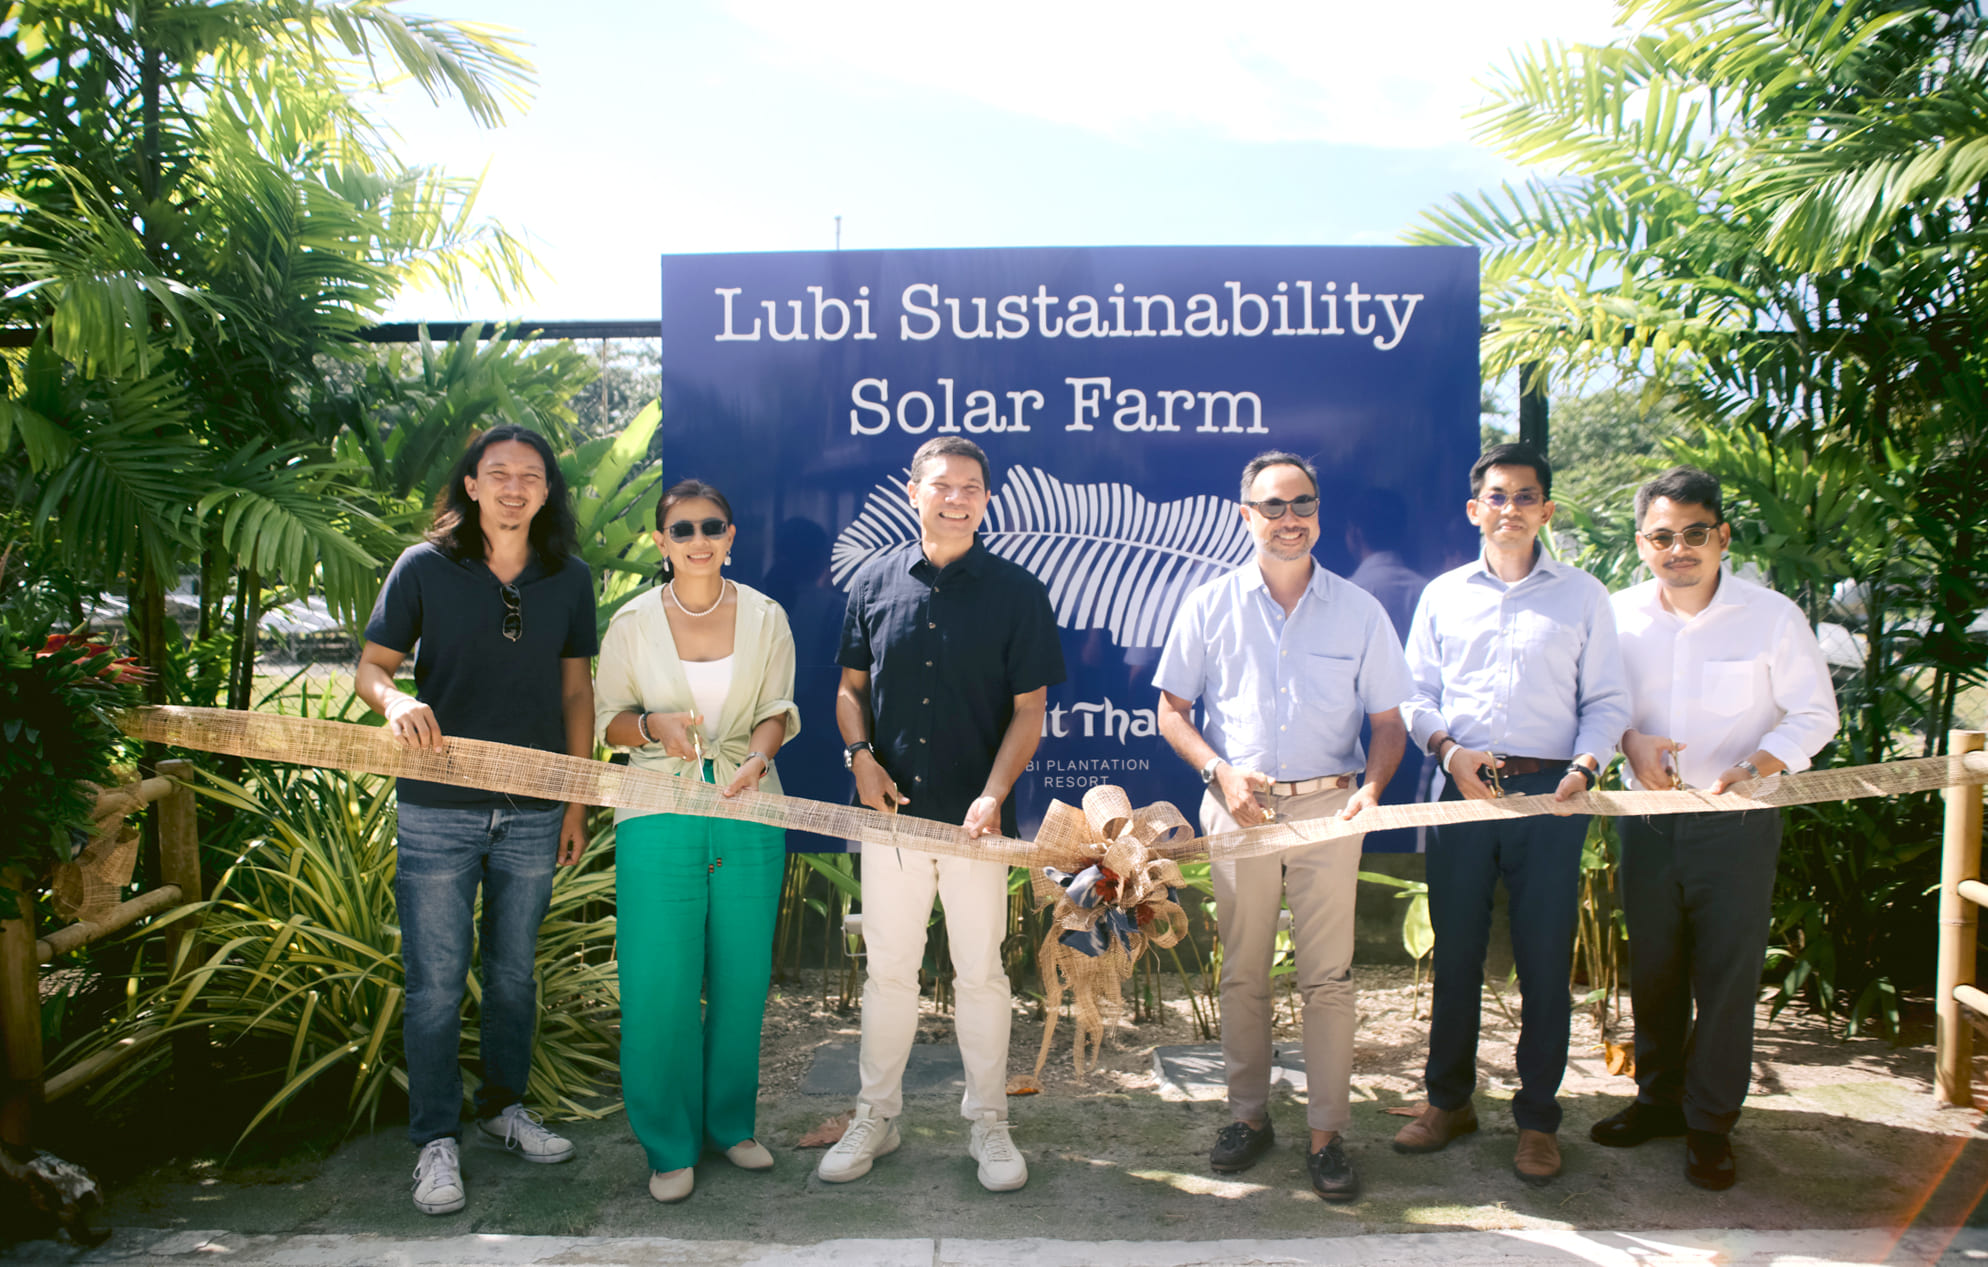 Torre Lorenzo inaugurates solar farm in Dusit Thani Lubi Plantation Resort in Davao de Oro